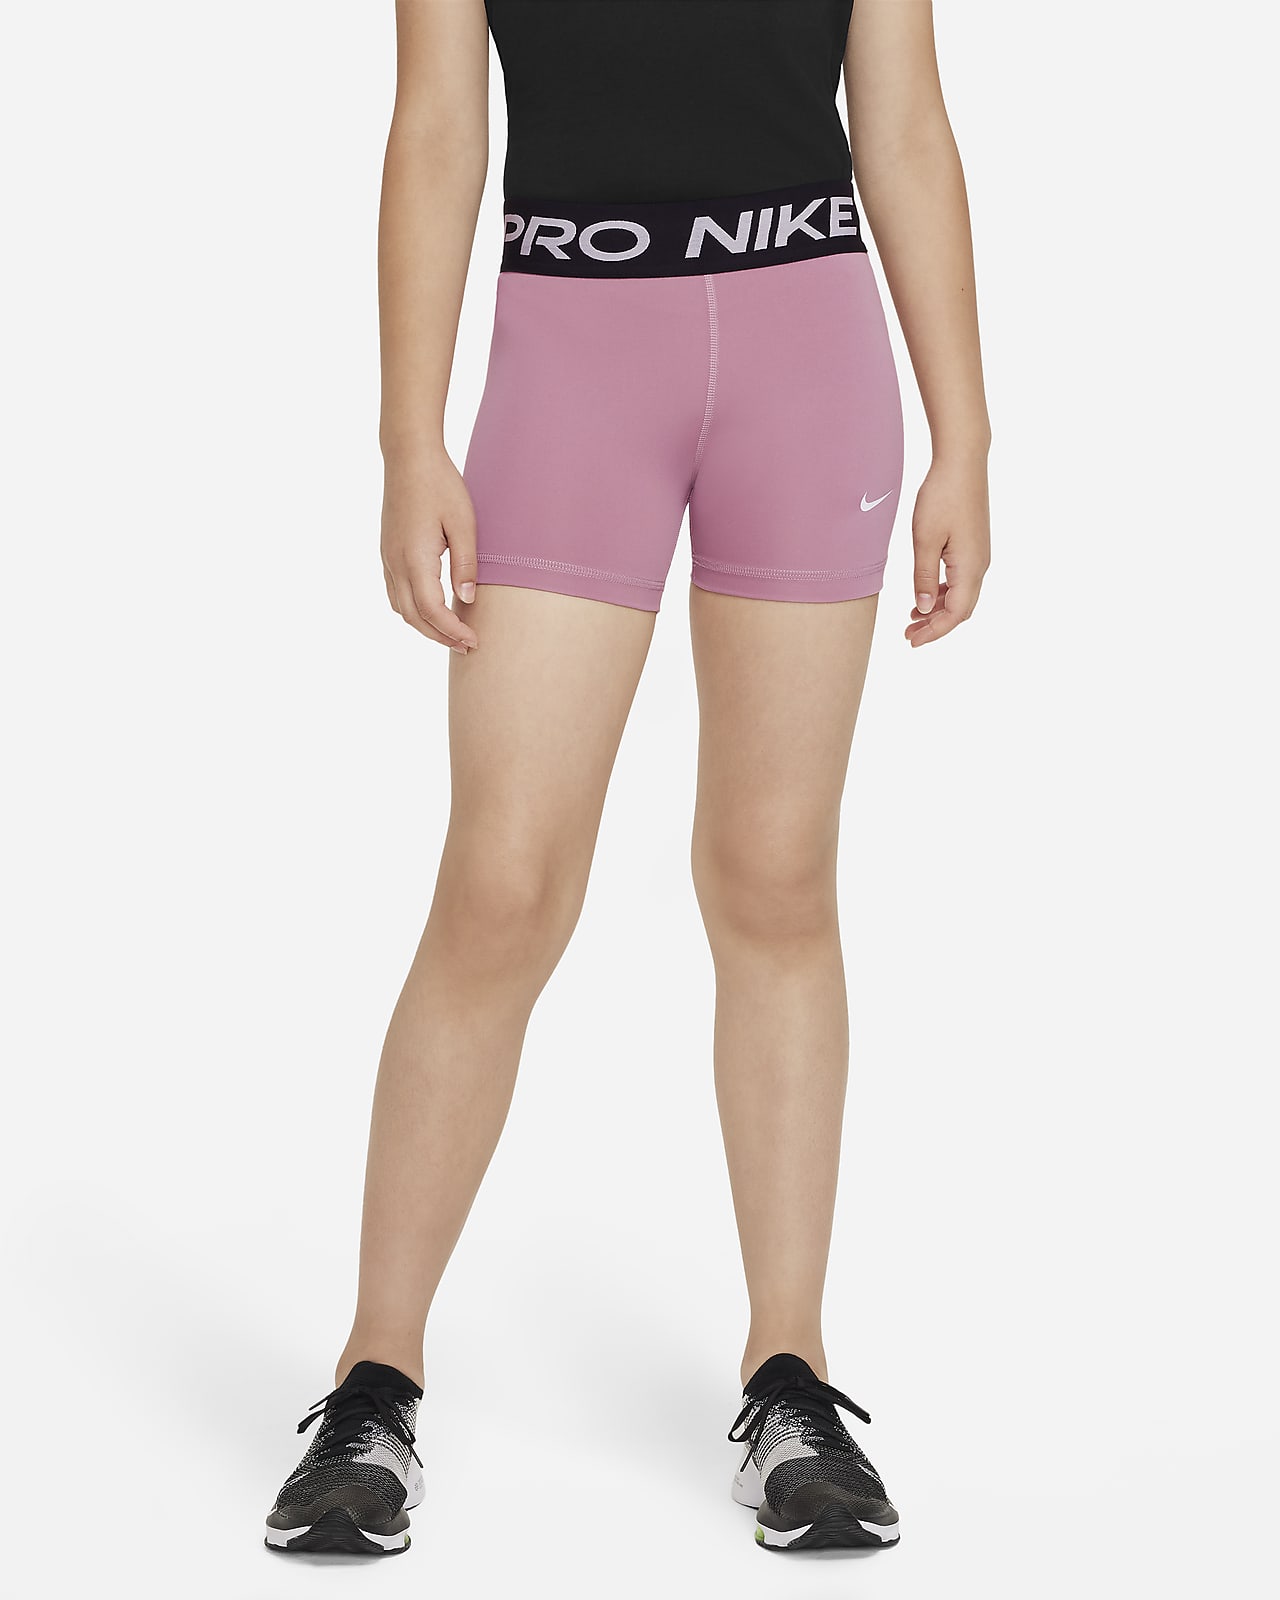 Nike Pro 8 cm Genç Çocuk (Kız) Şortu